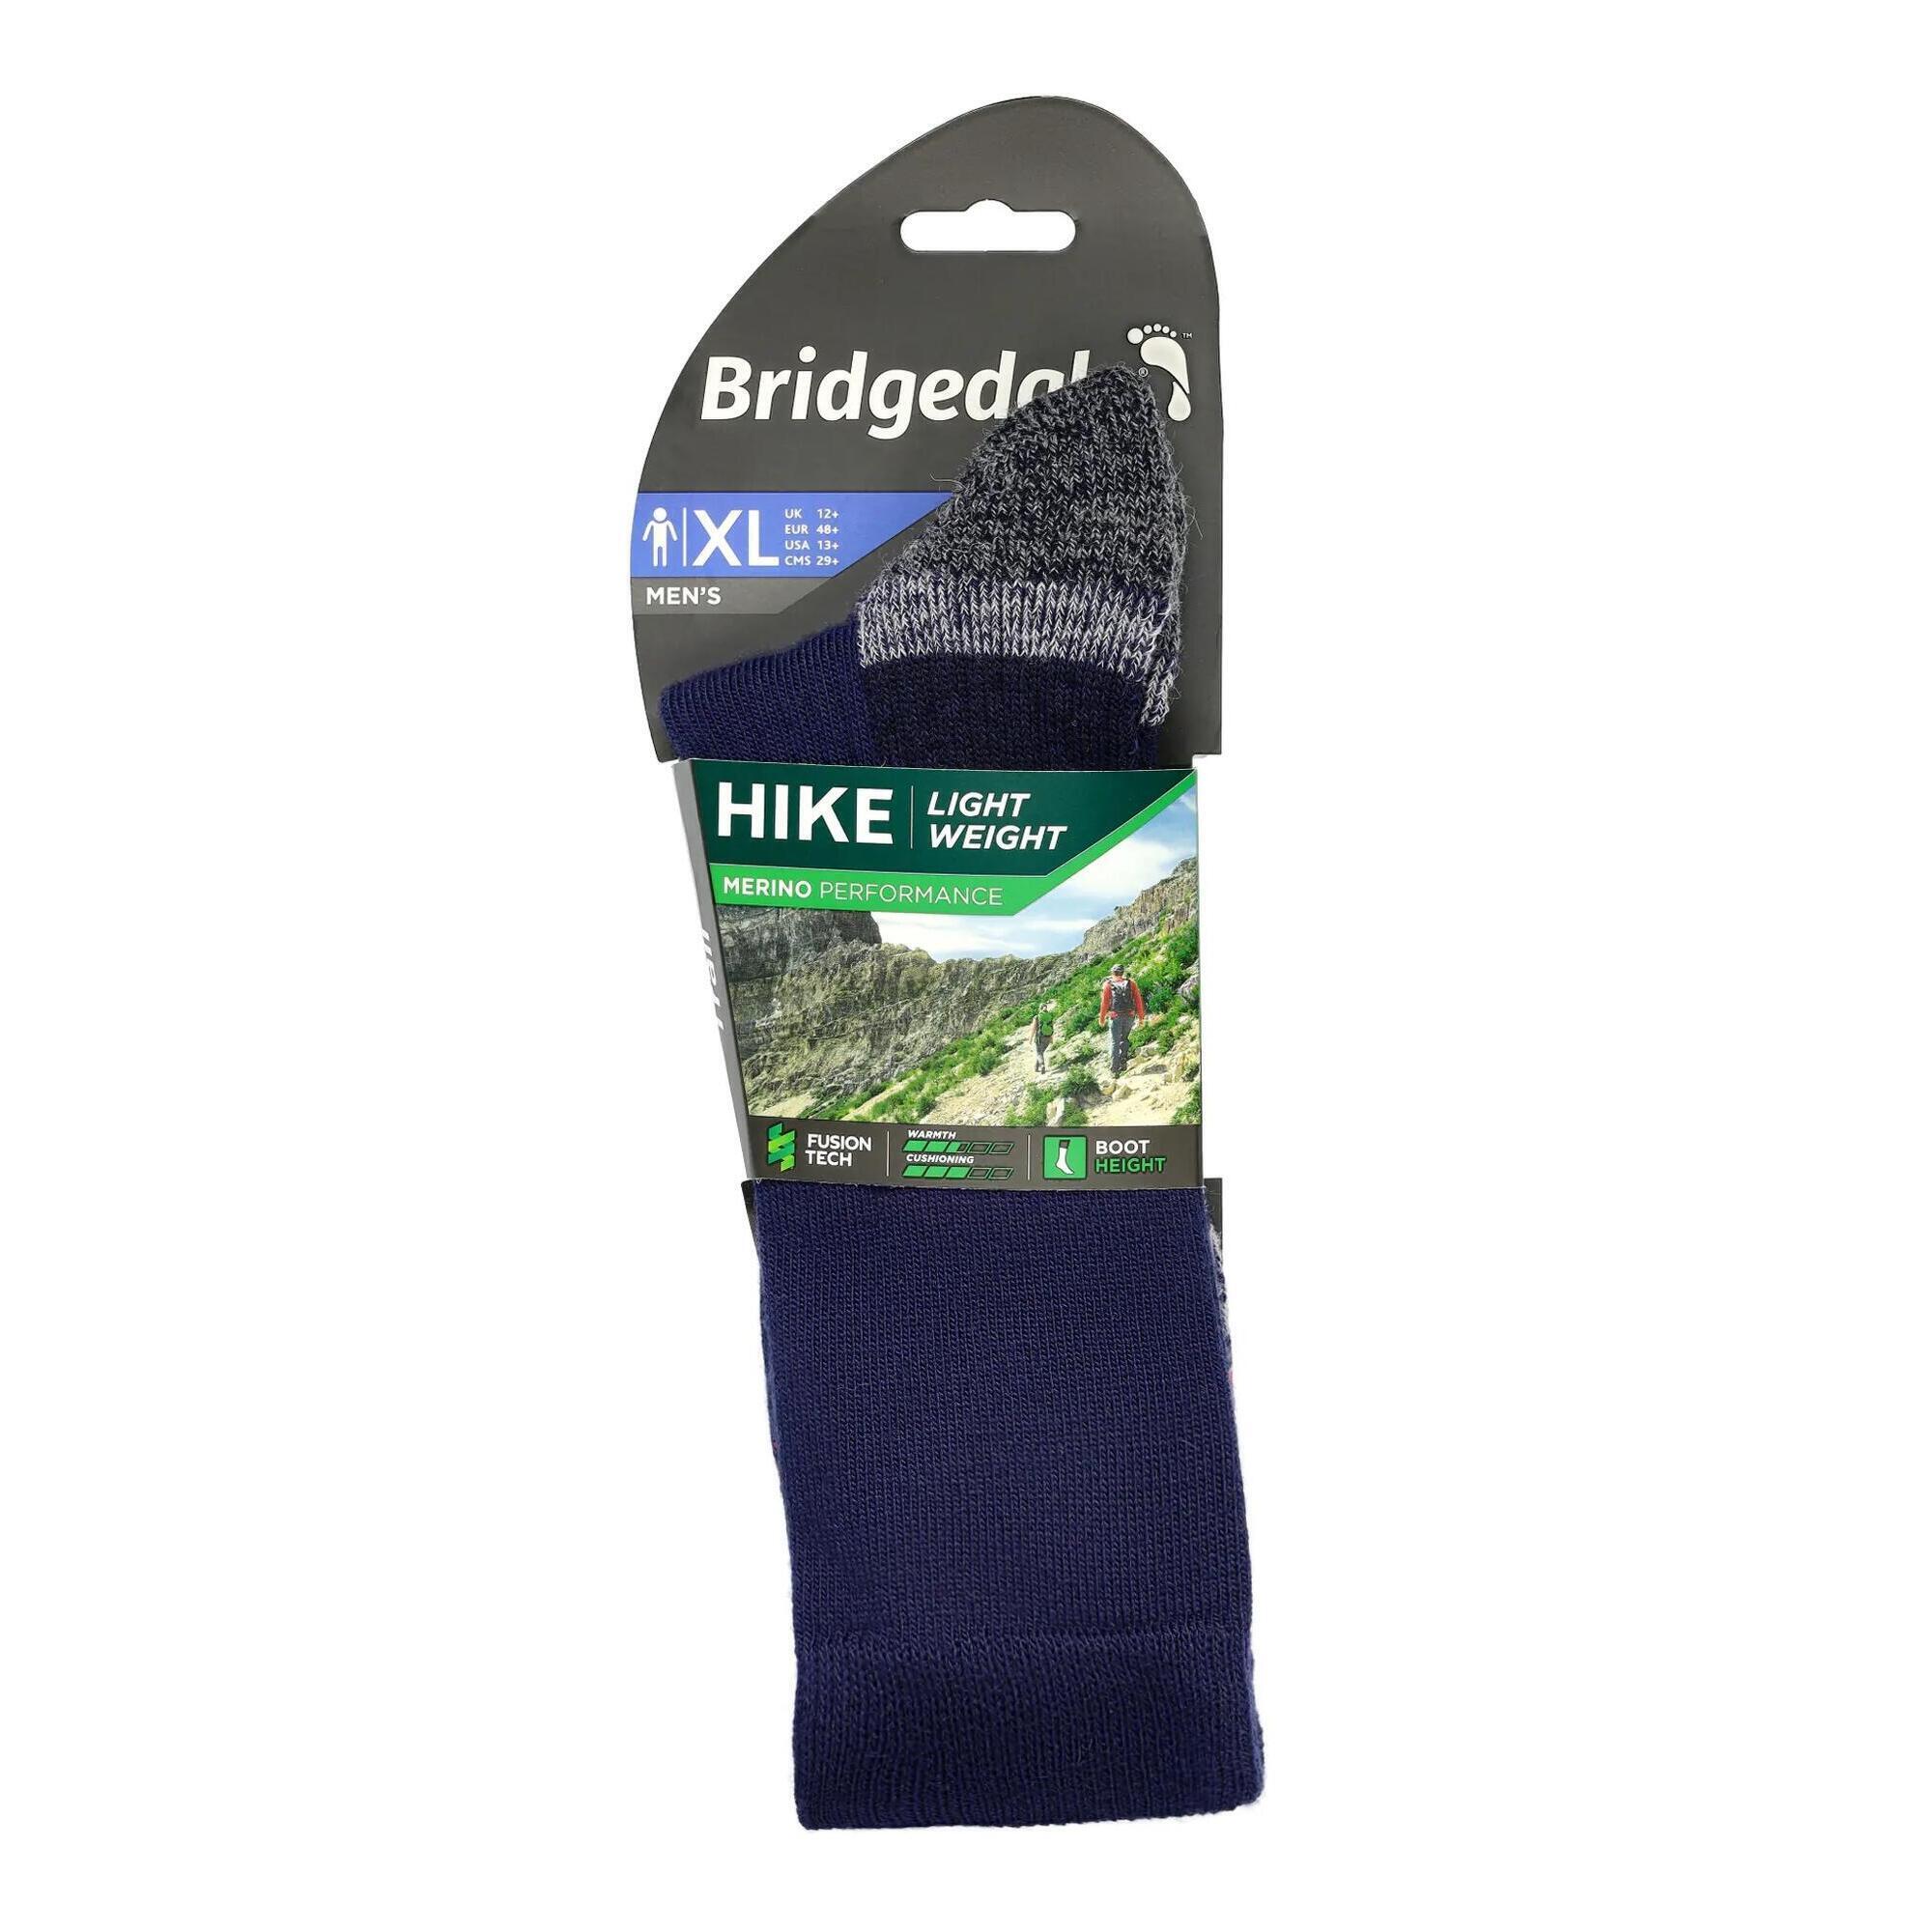 BRIDGEDALE HIKE Lightweight Merino Performance Boot Original Men's - Navy blue